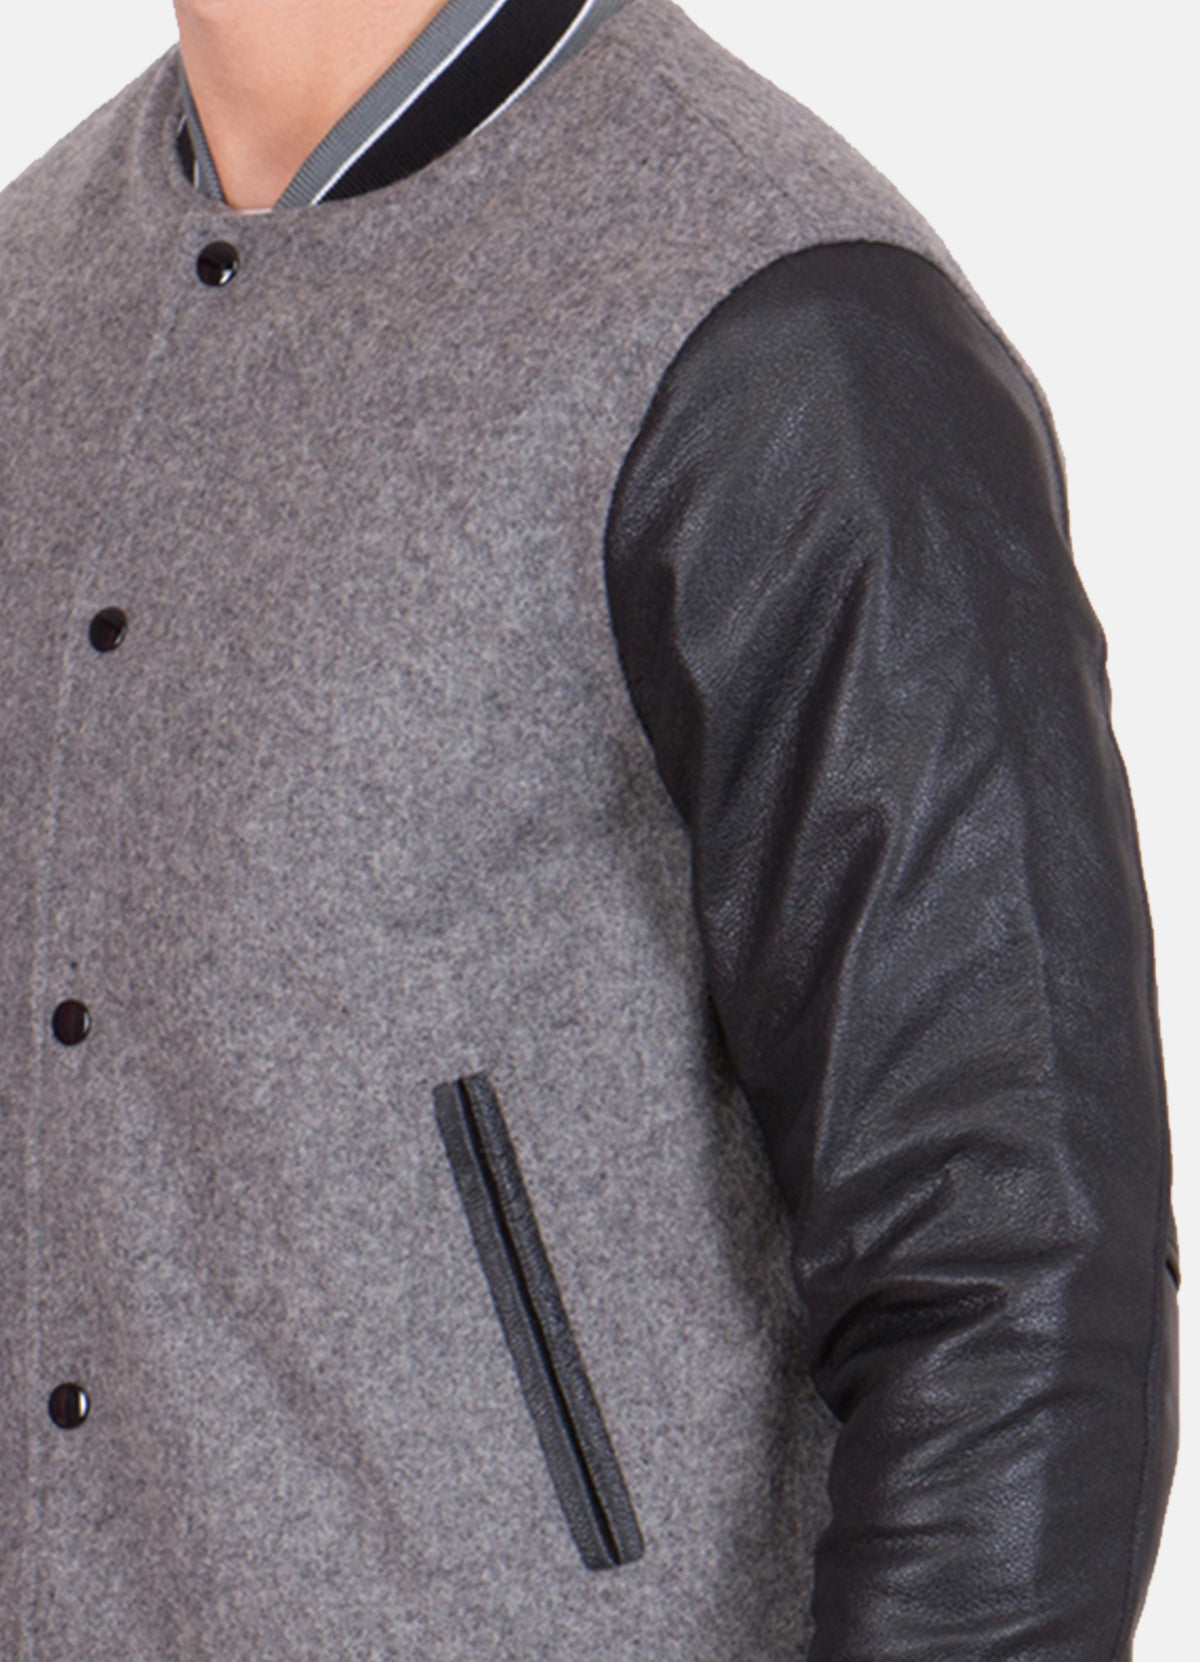 Mens Gray and Black Varsity Jacket | Elite Jacket